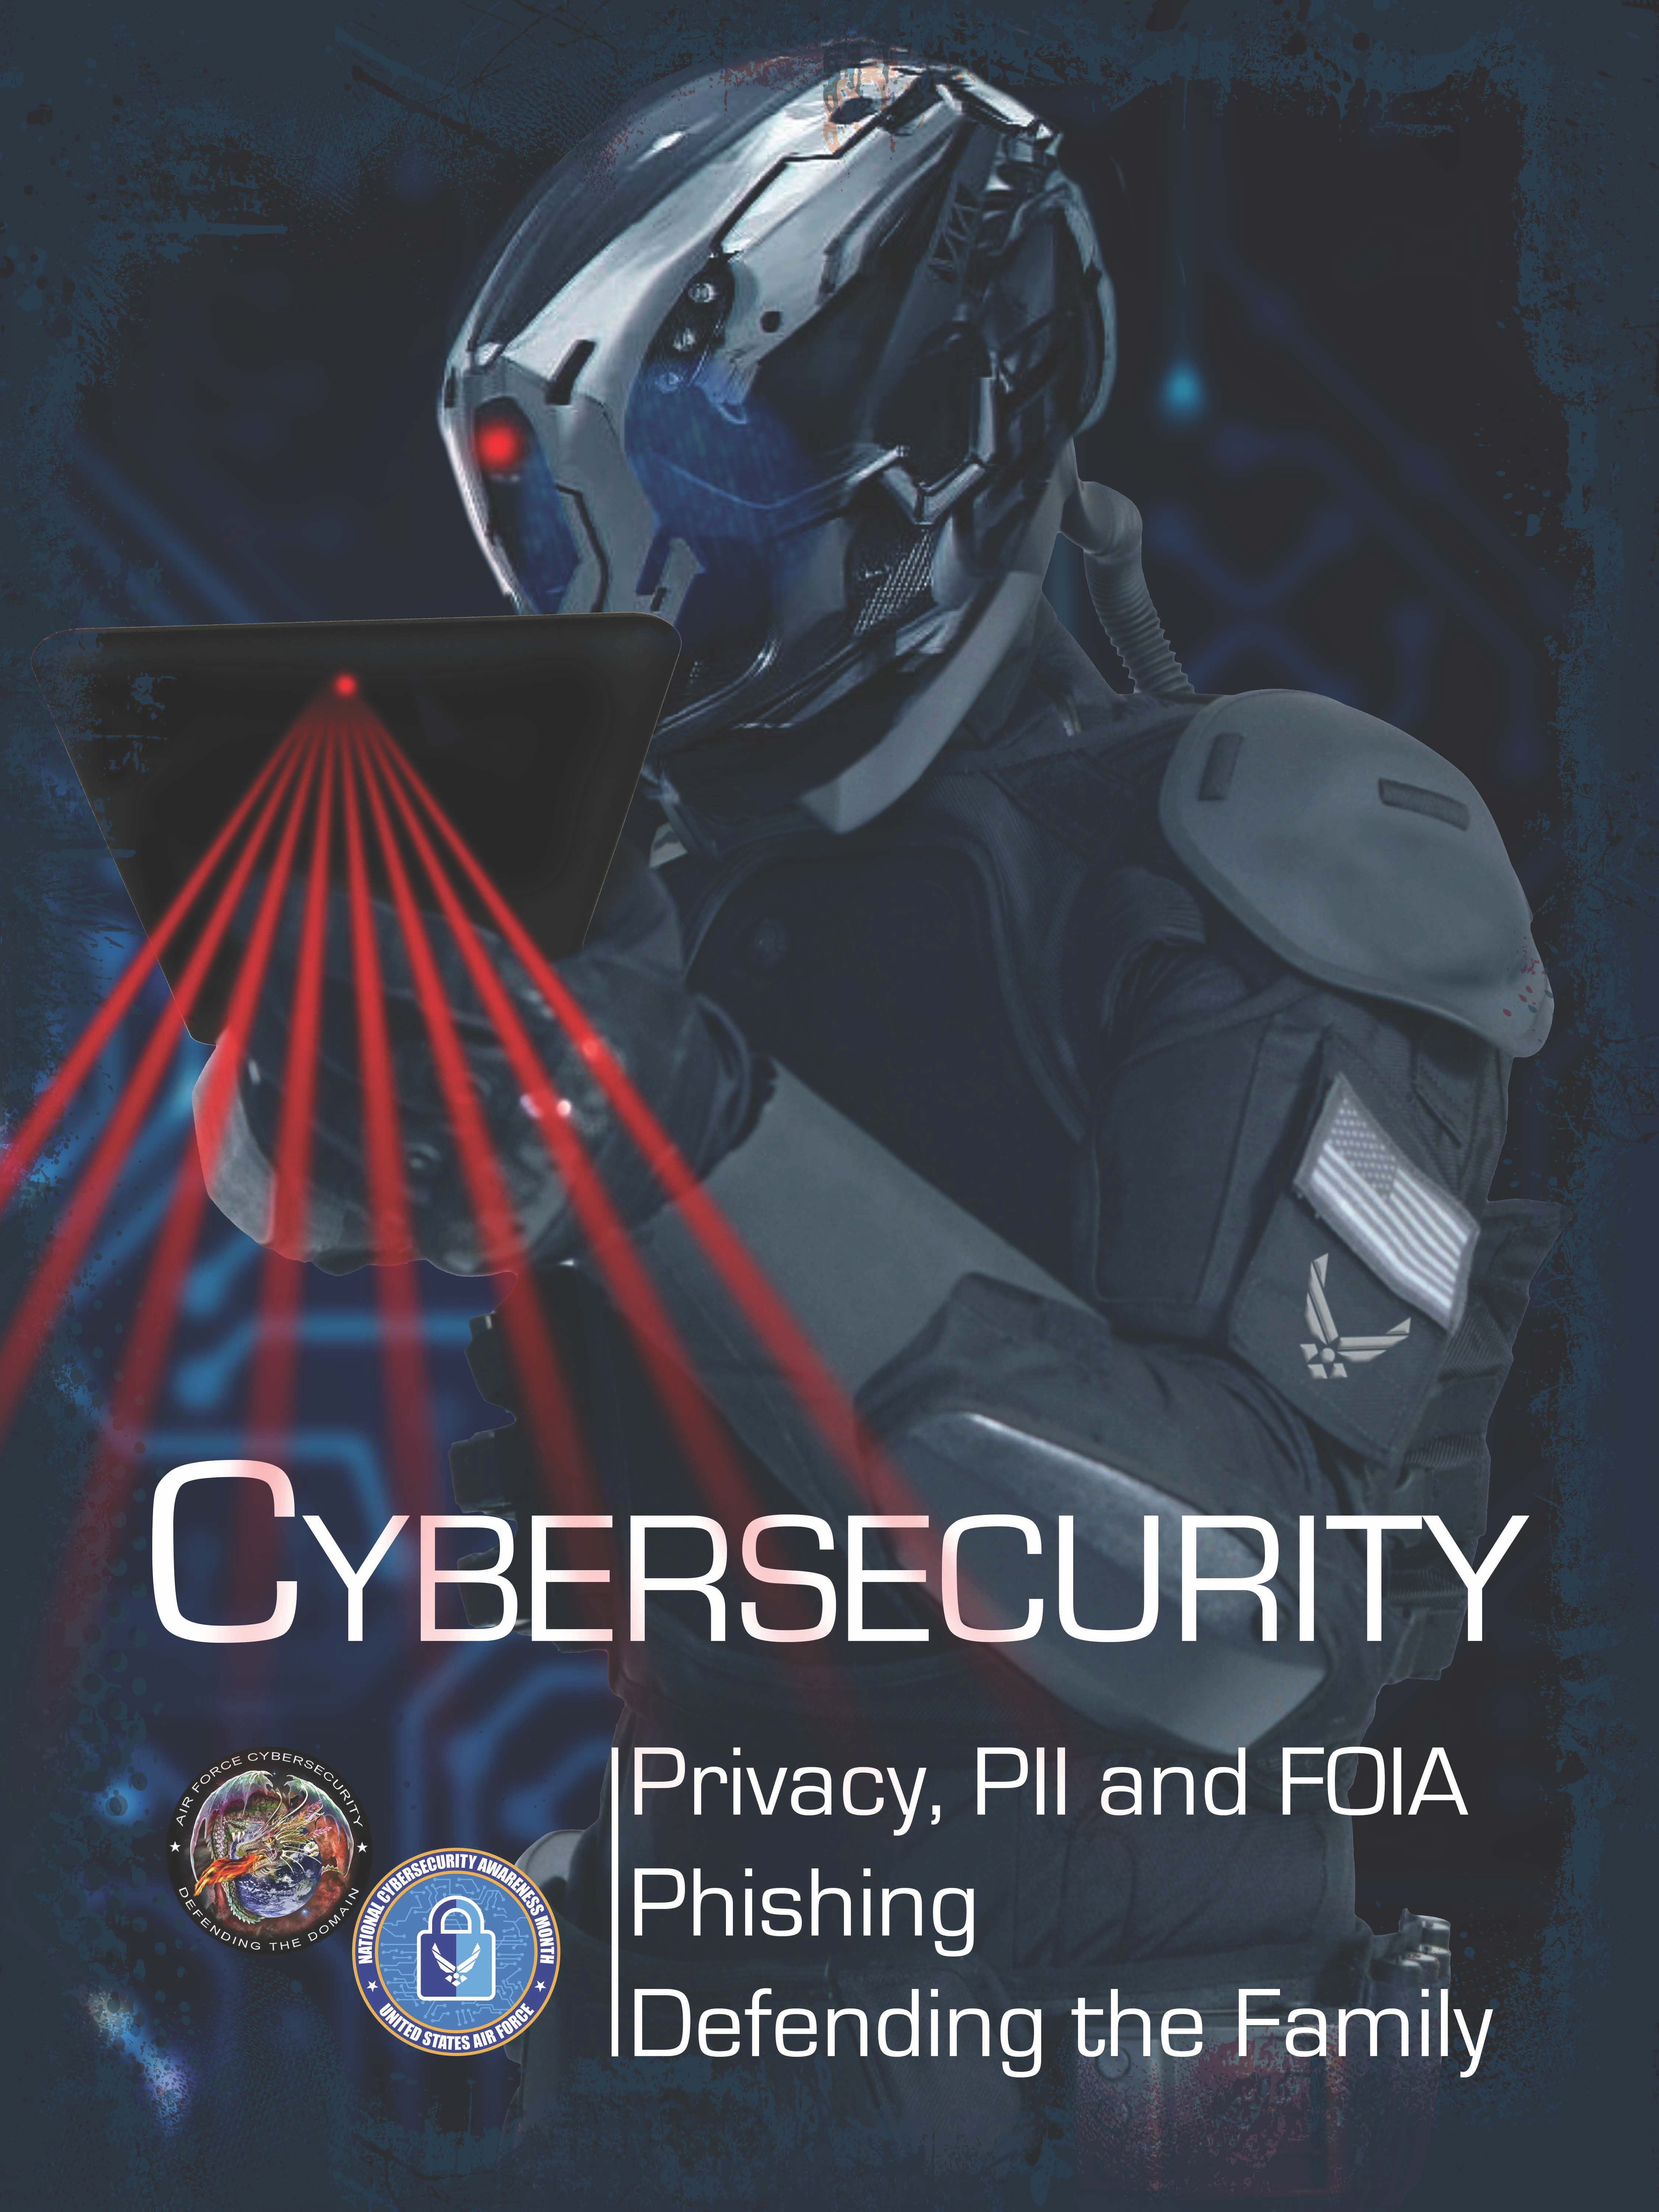 National cybersecurity awareness poster warrior 2019